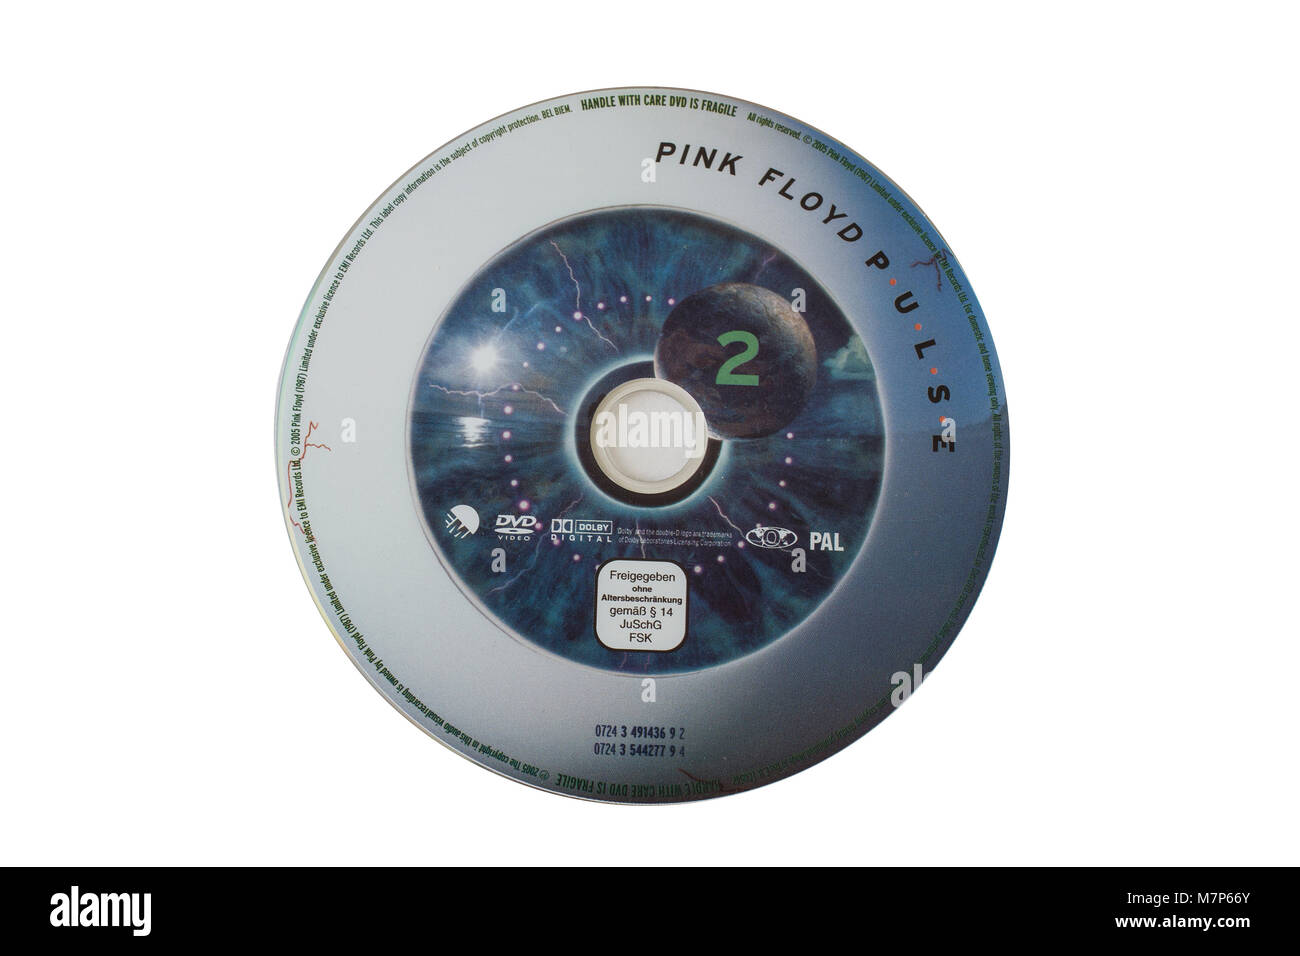 Pink Floyd PULSE original DVD Stock Photo - Alamy